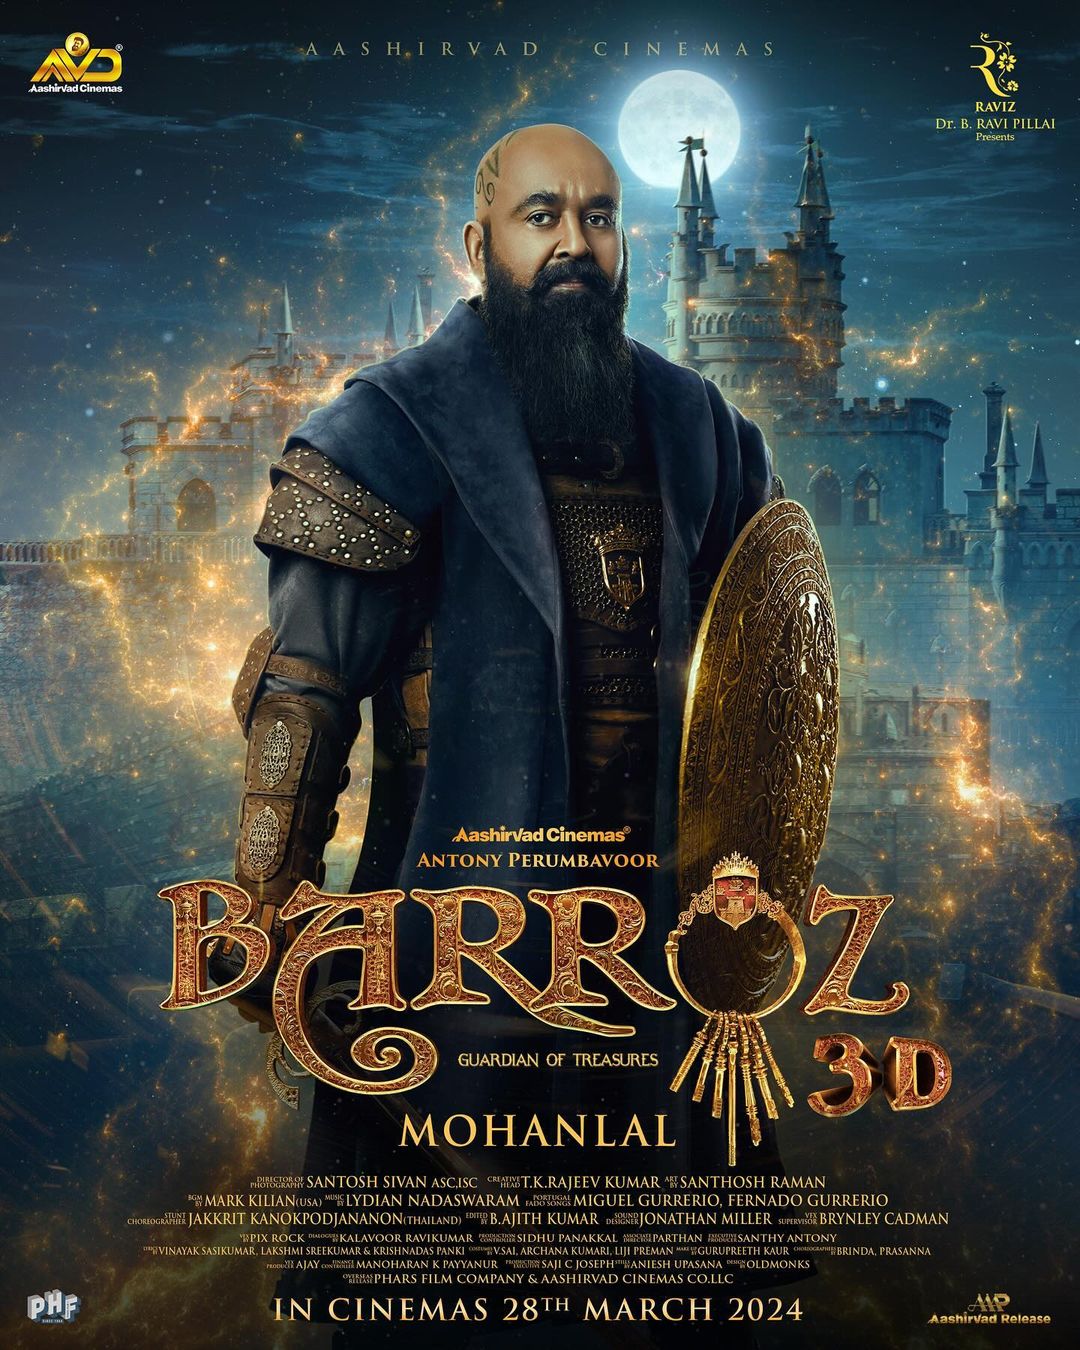 Barroz Movie Poster